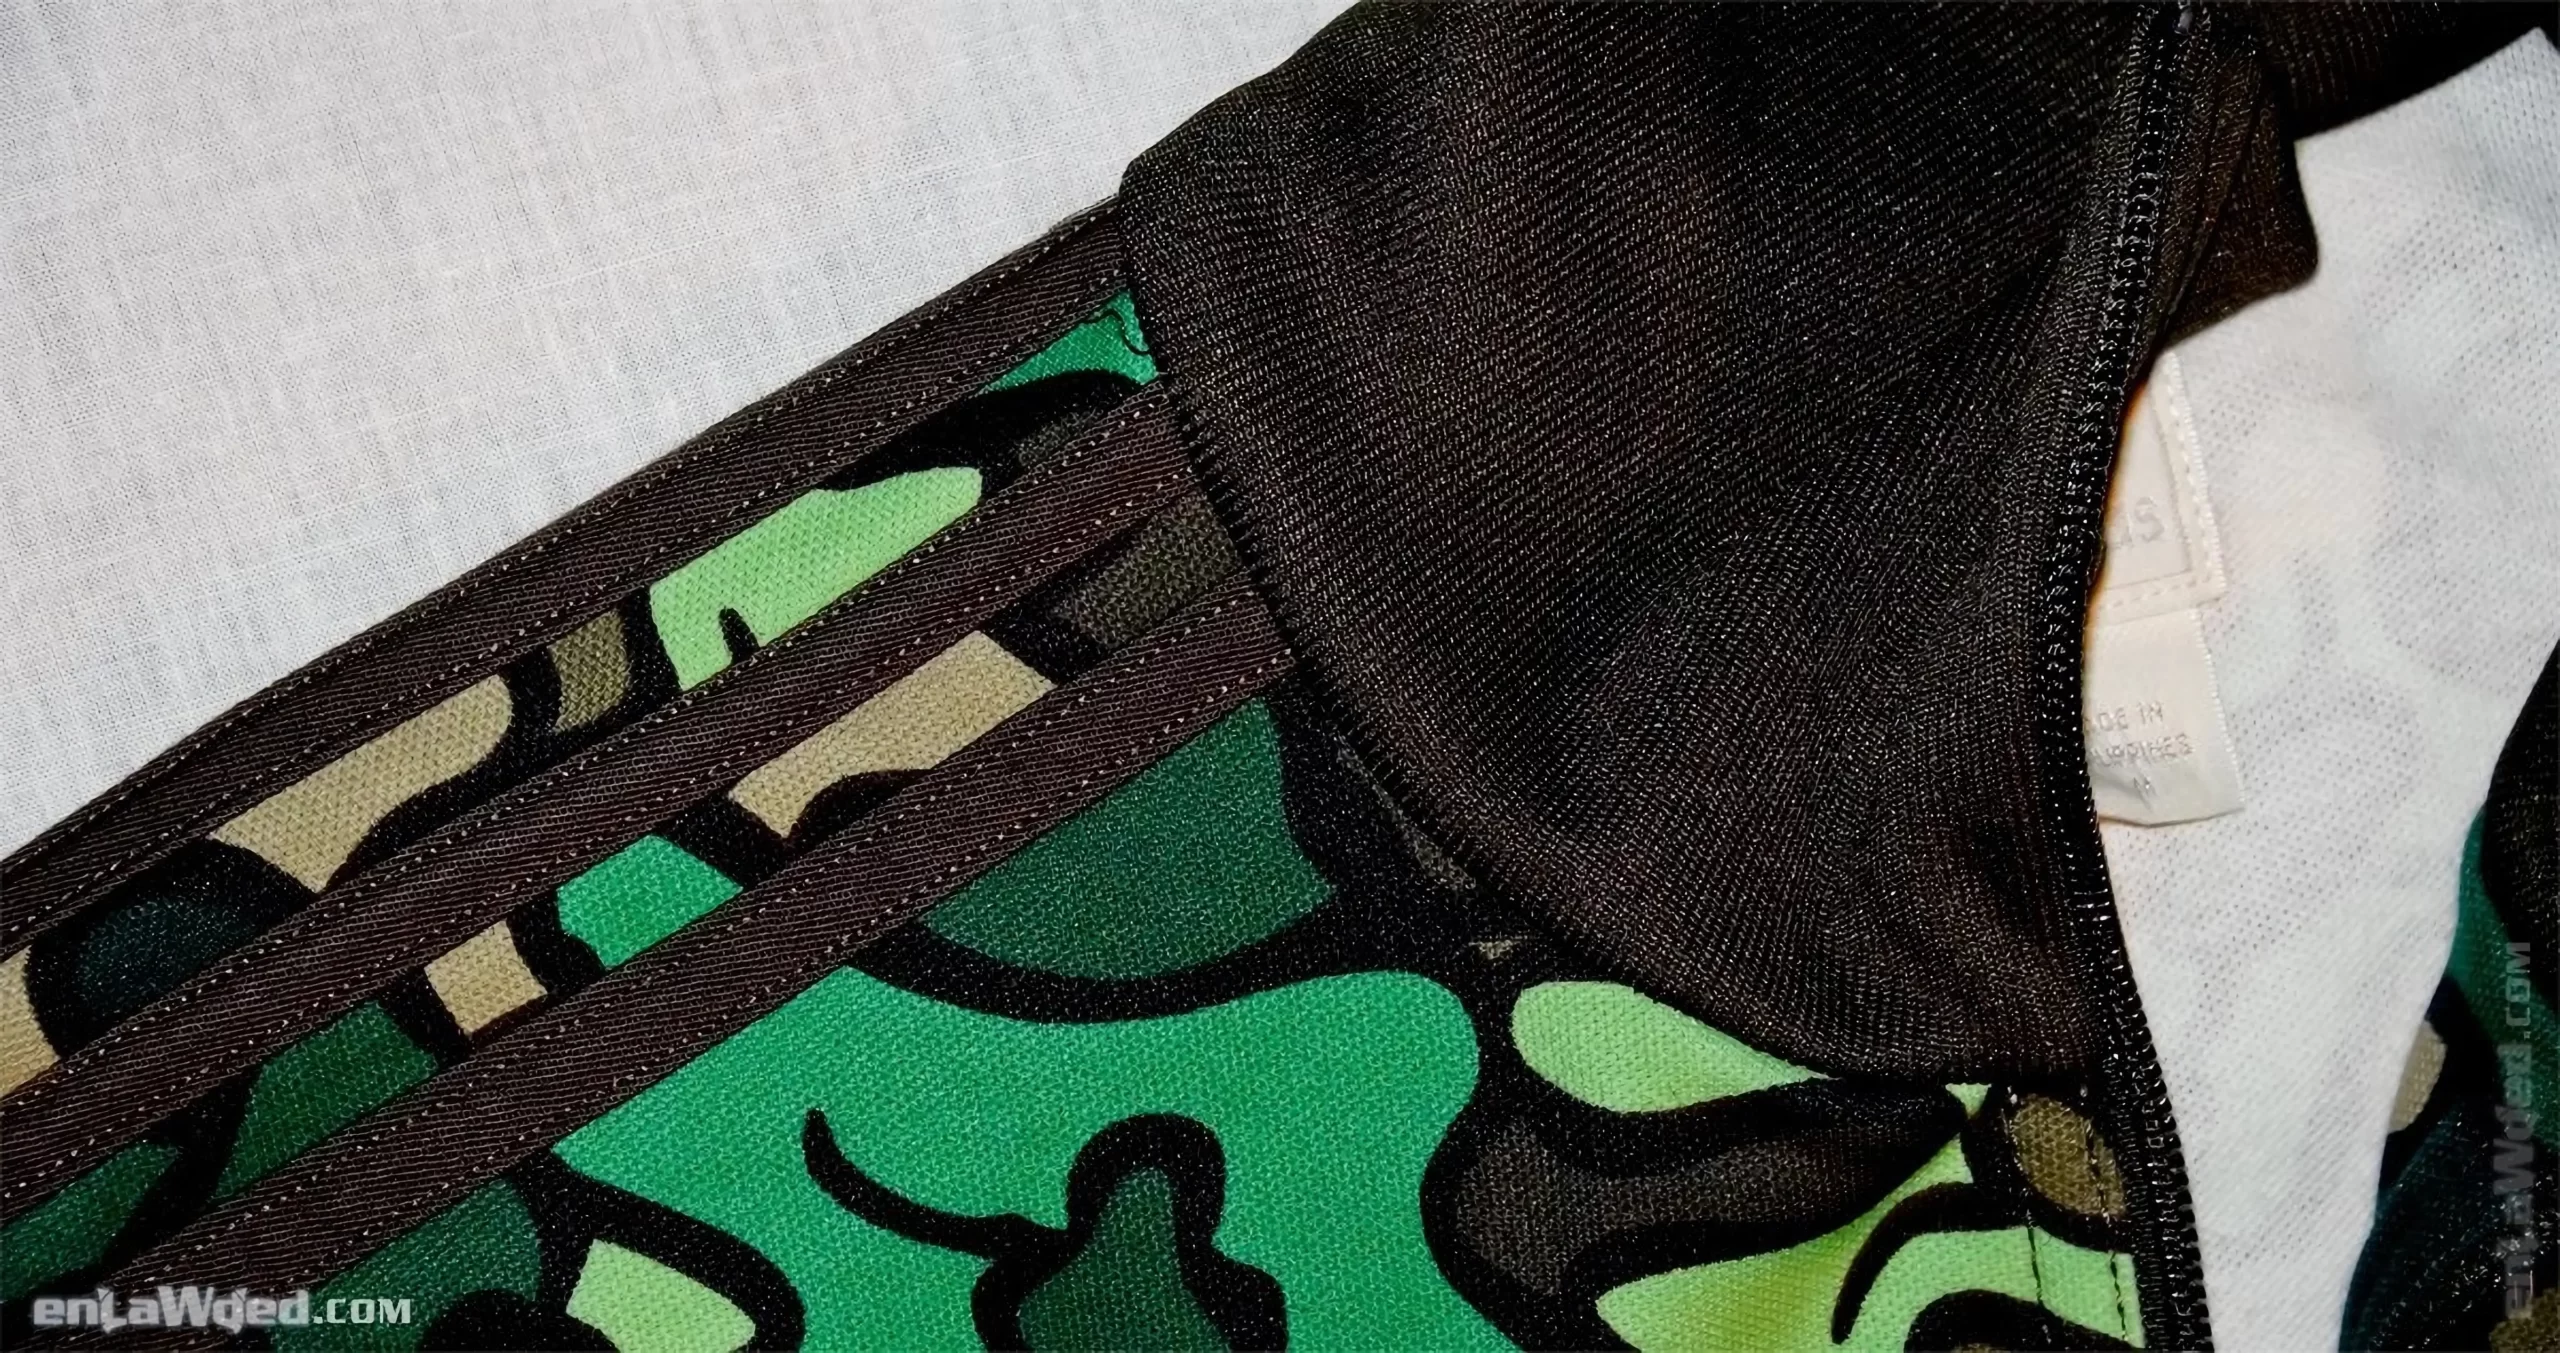 Men’s 2006 Adidas Originals Green Safety Camo Track Top: Resourceful (EnLawded.com file #lmchi7cfl8ekjd066kq)